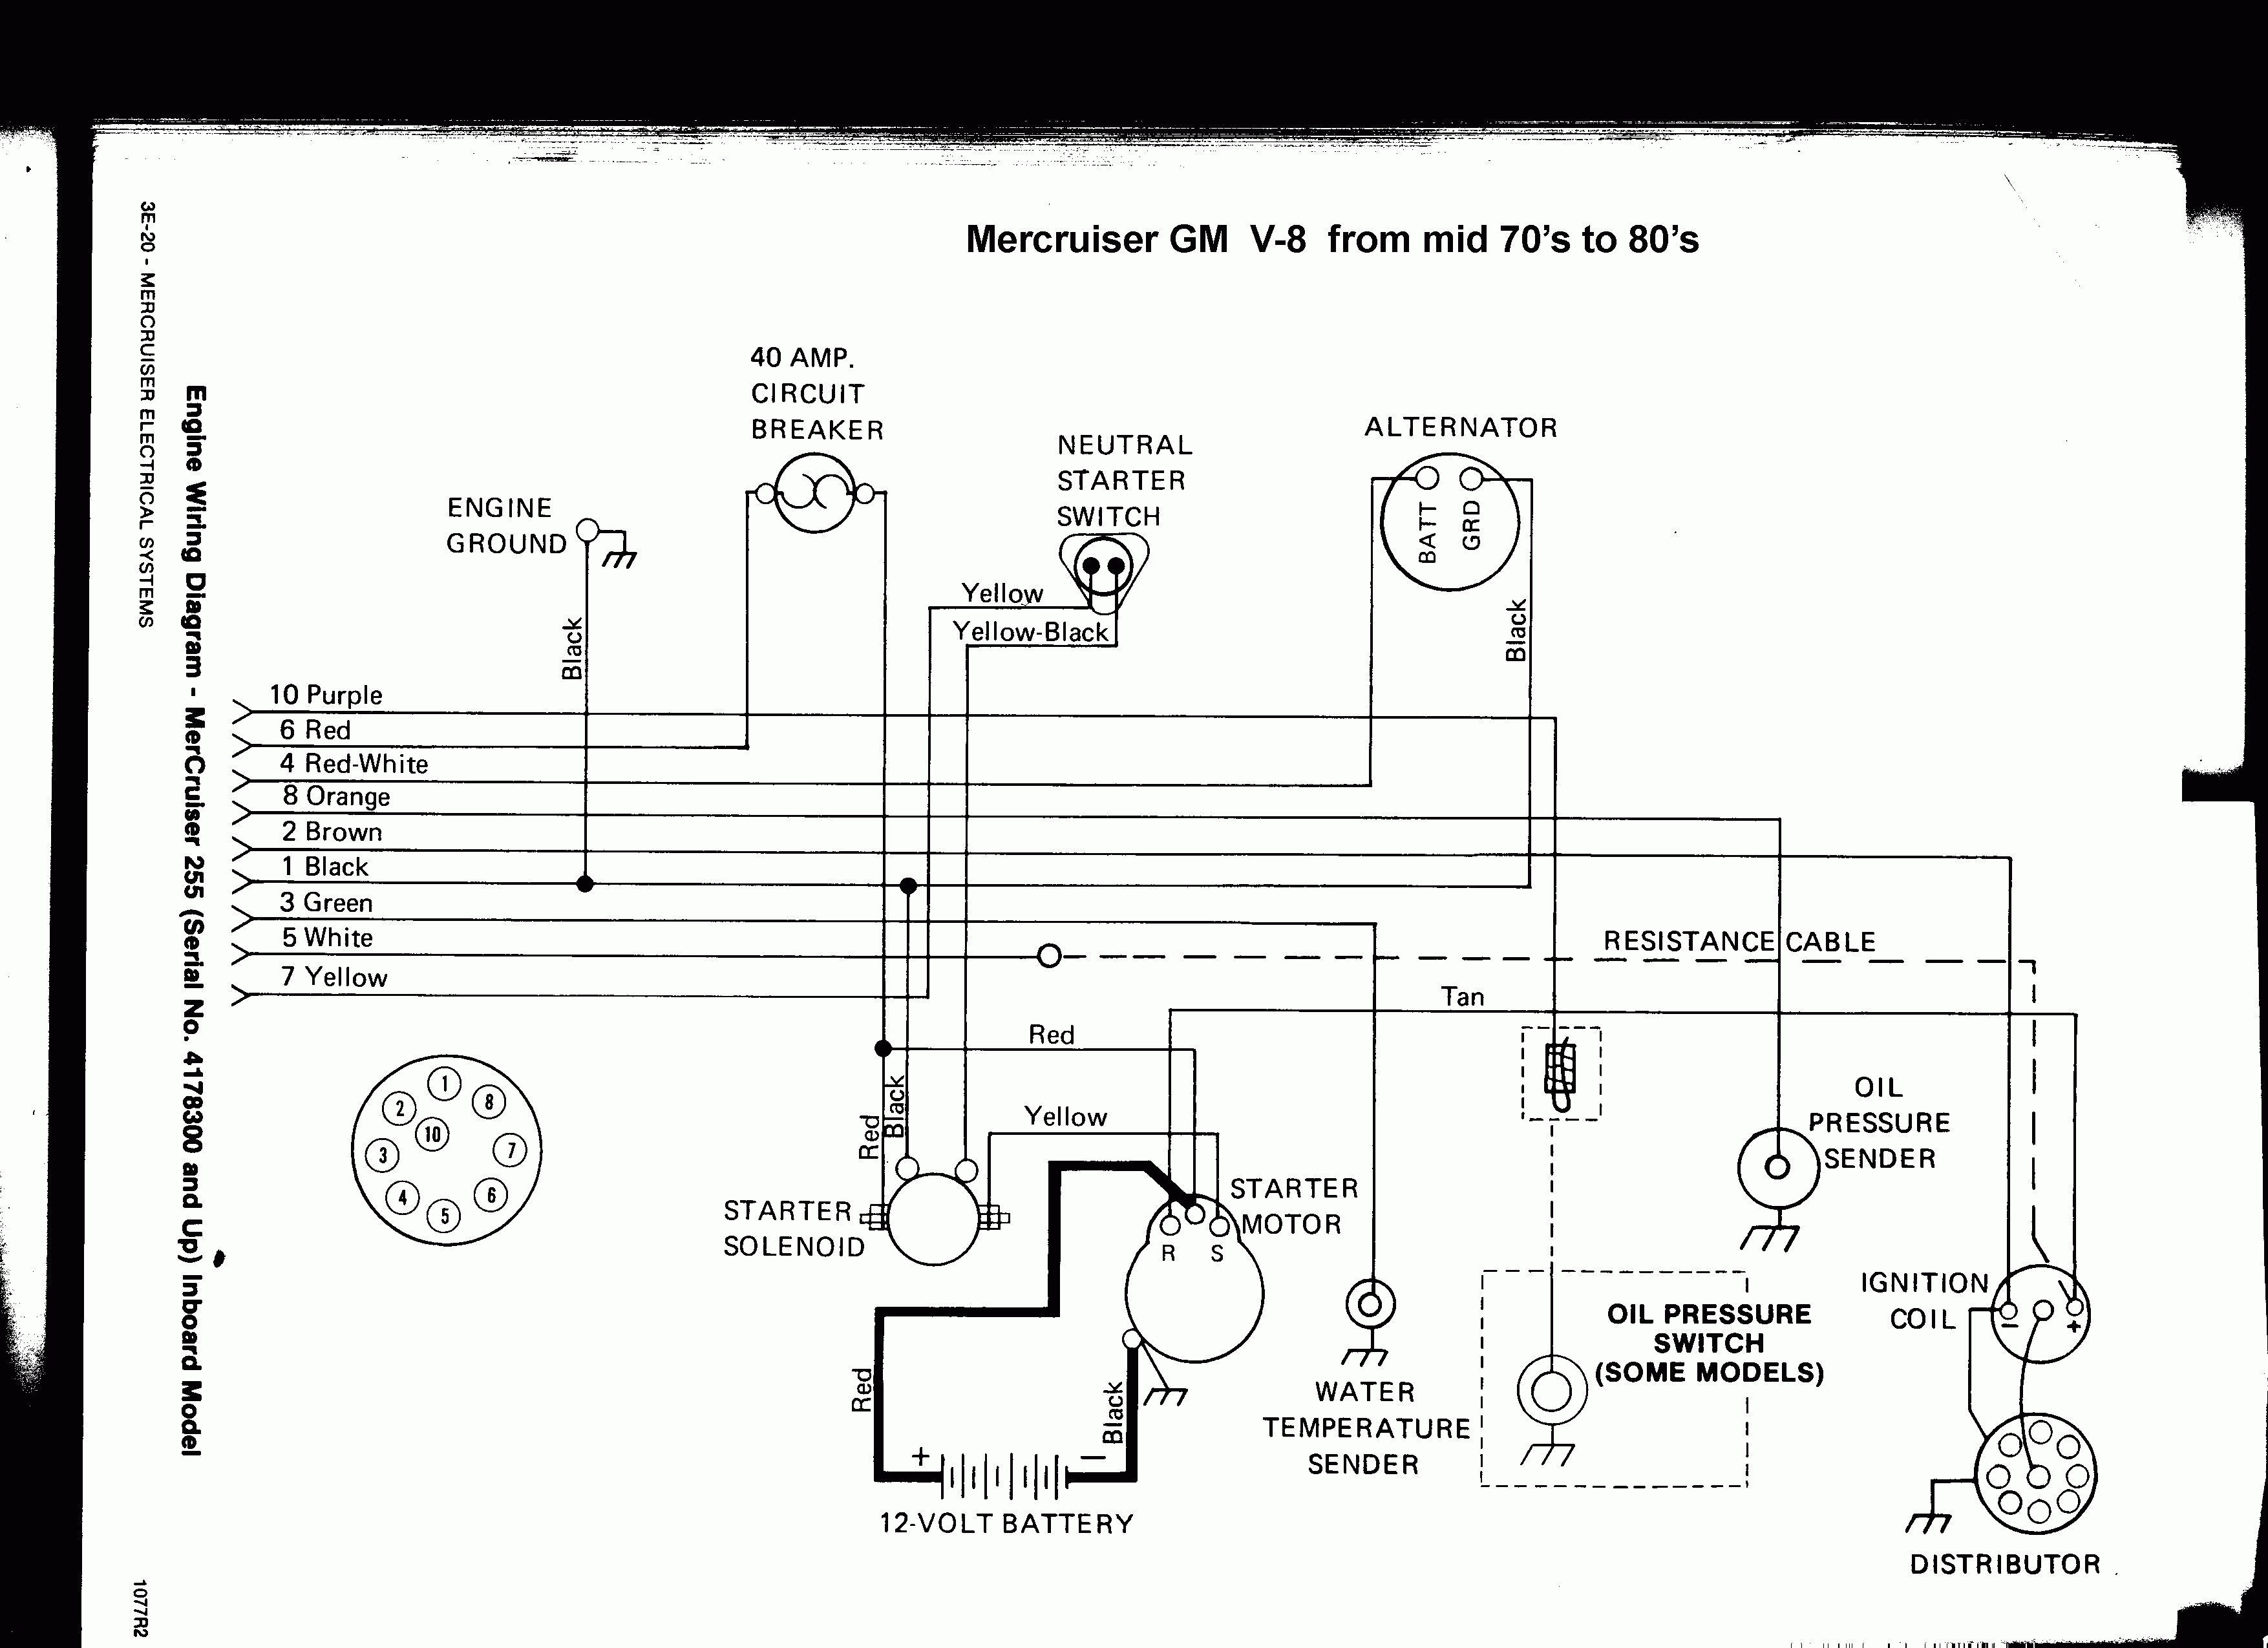 Ebook-9159] Mercruiser Trim Sender Wiring Diagram User Manual | 2019 - Mercruiser Trim Sender Wiring Diagram